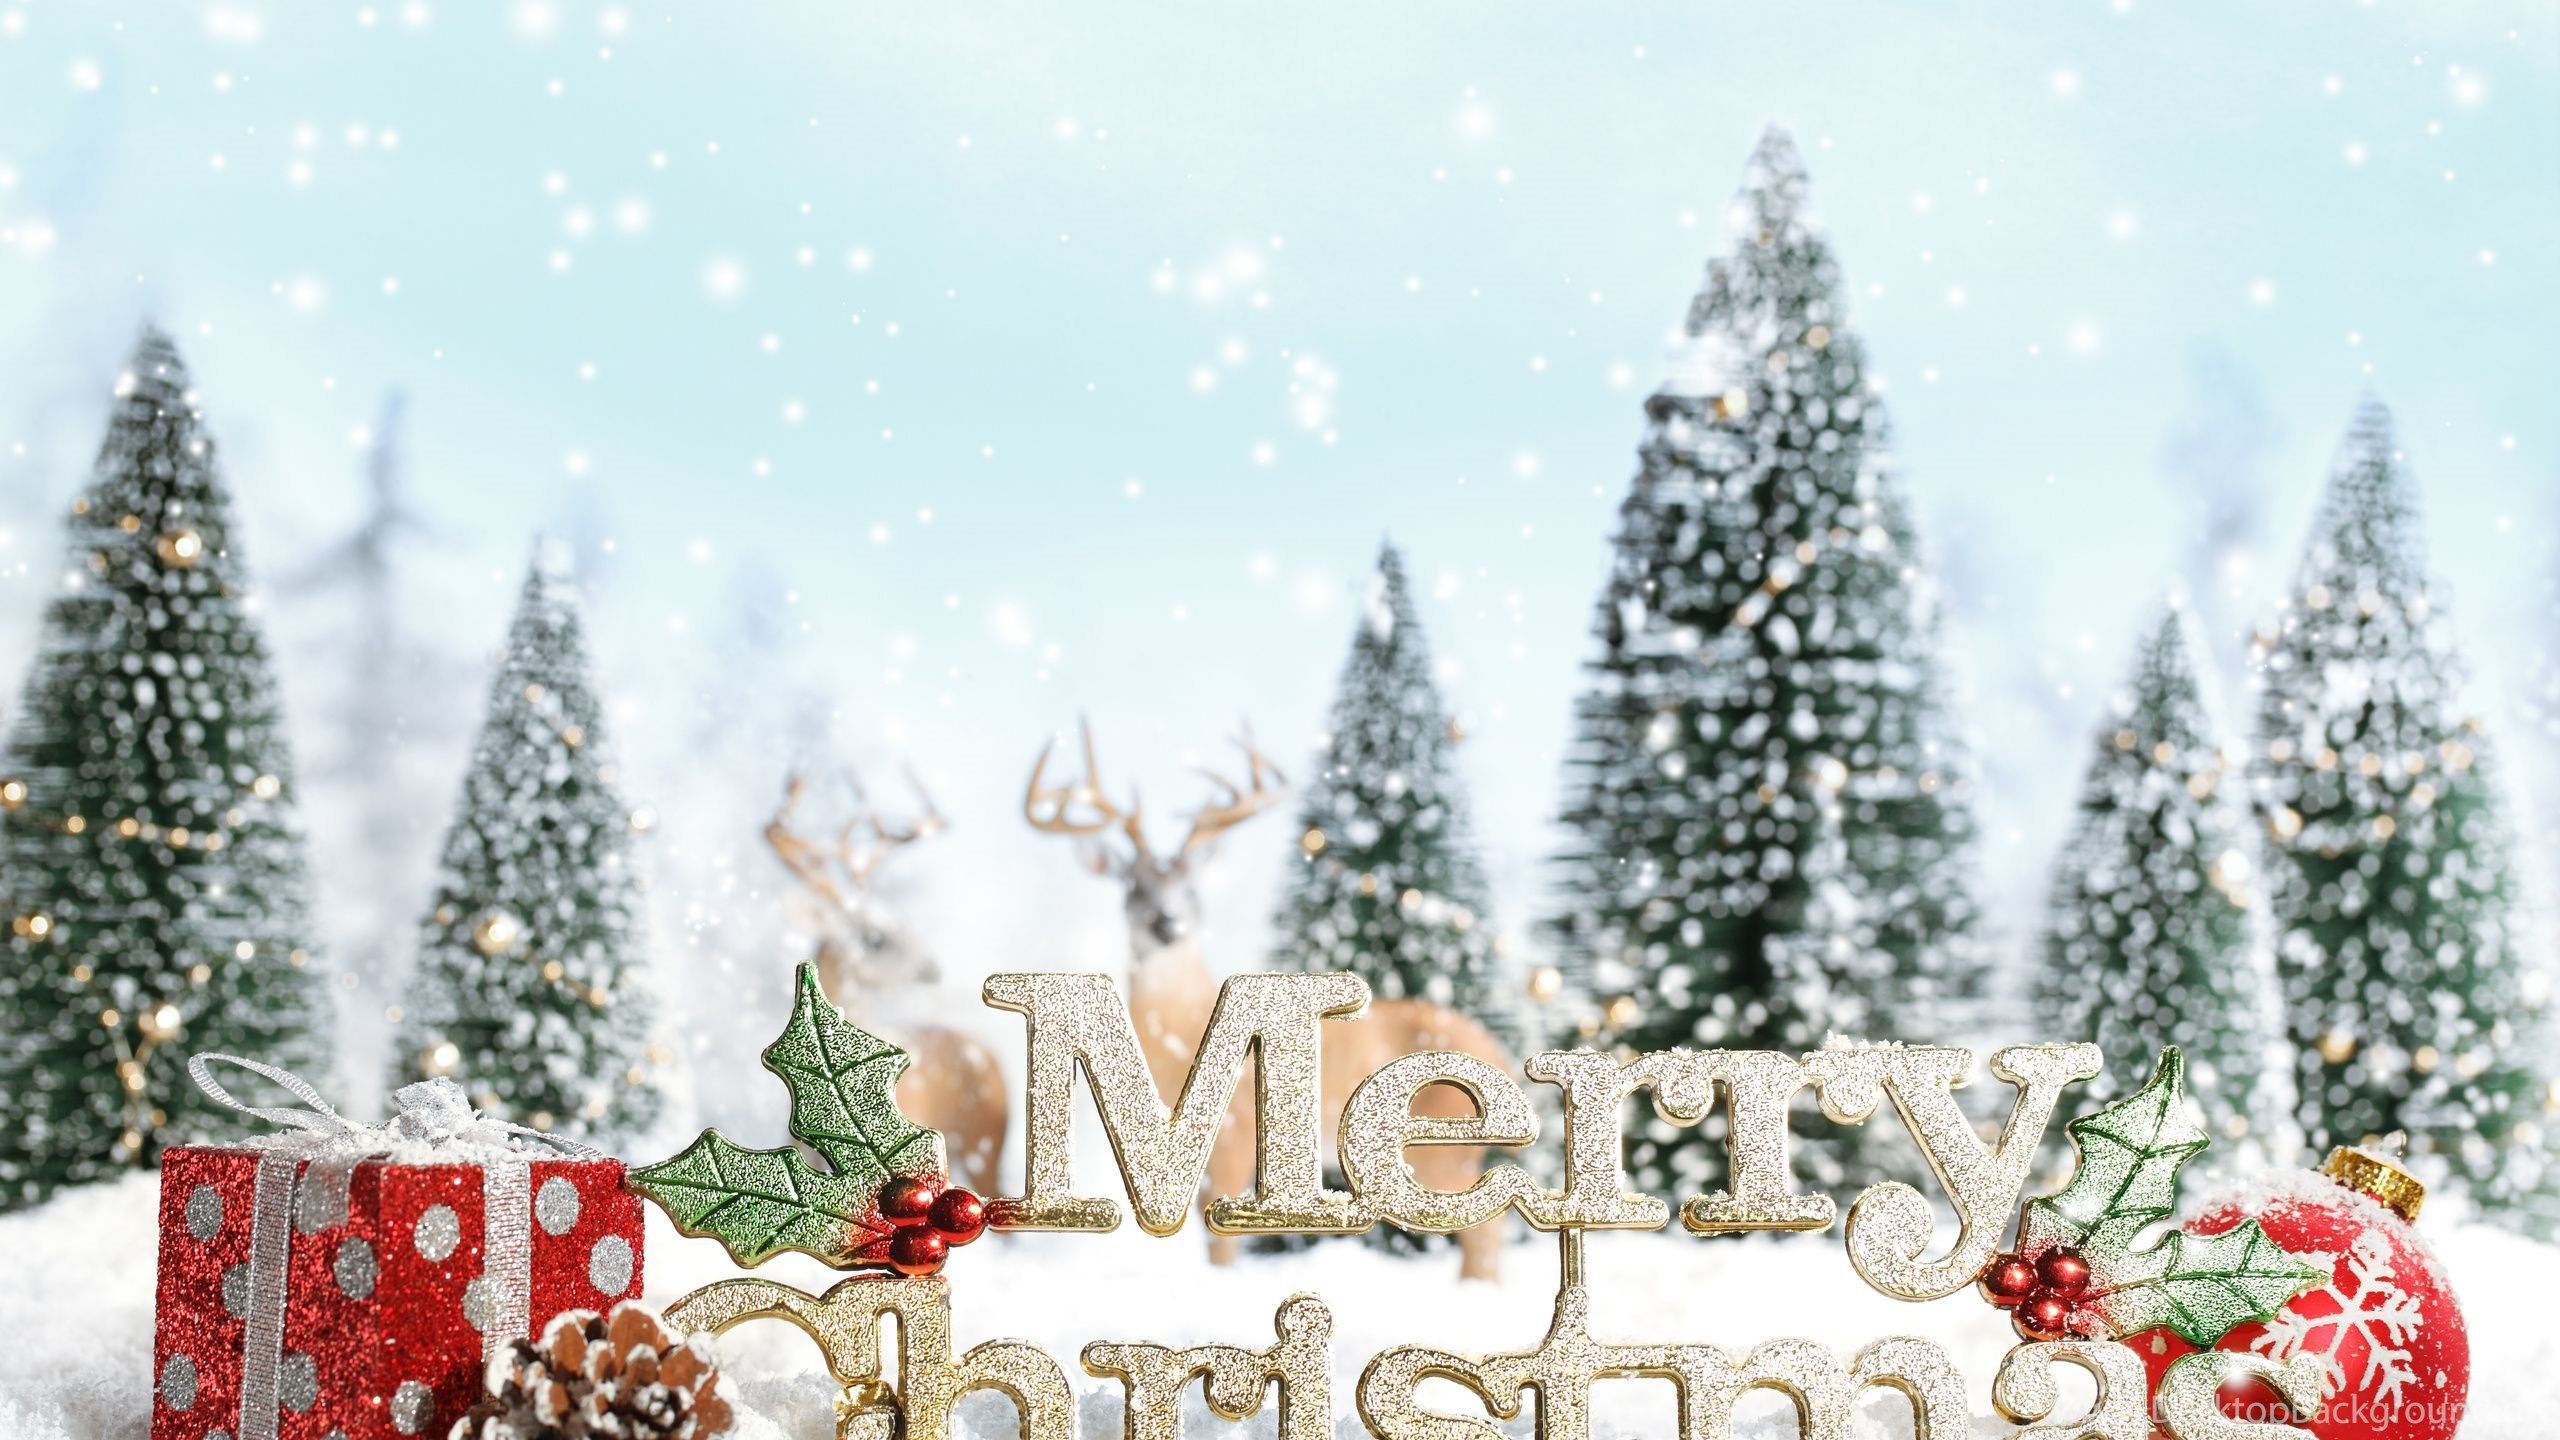 Merry Christmas Tree Wallpaper Background 123 HD Wallpaper. Desktop Background